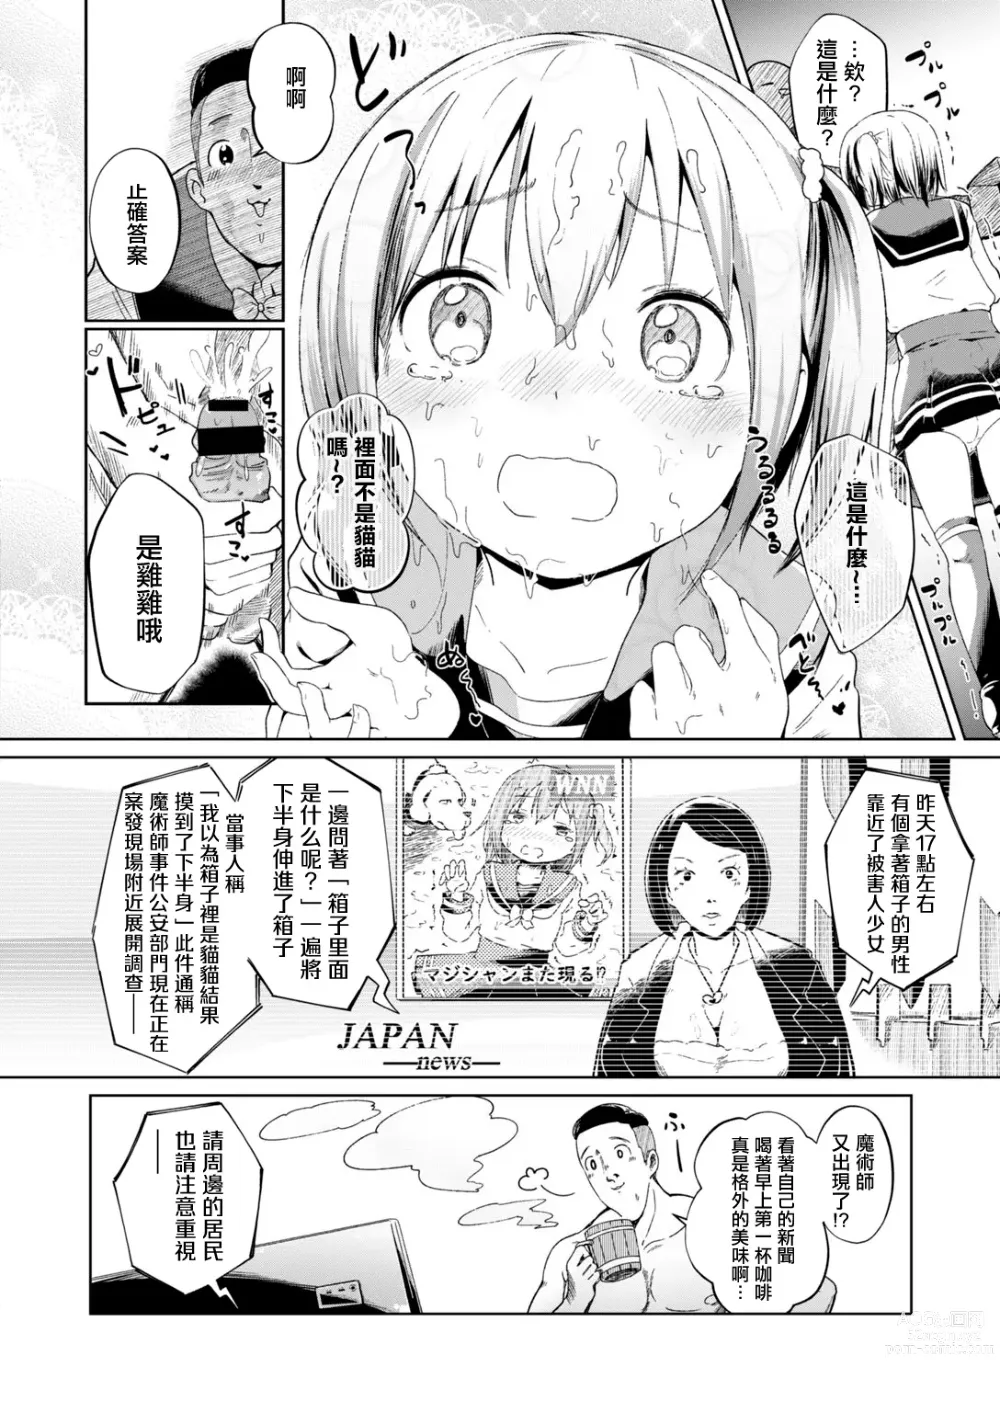 Page 6 of manga  事件發生!! ~可疑人物和箱子裡面~